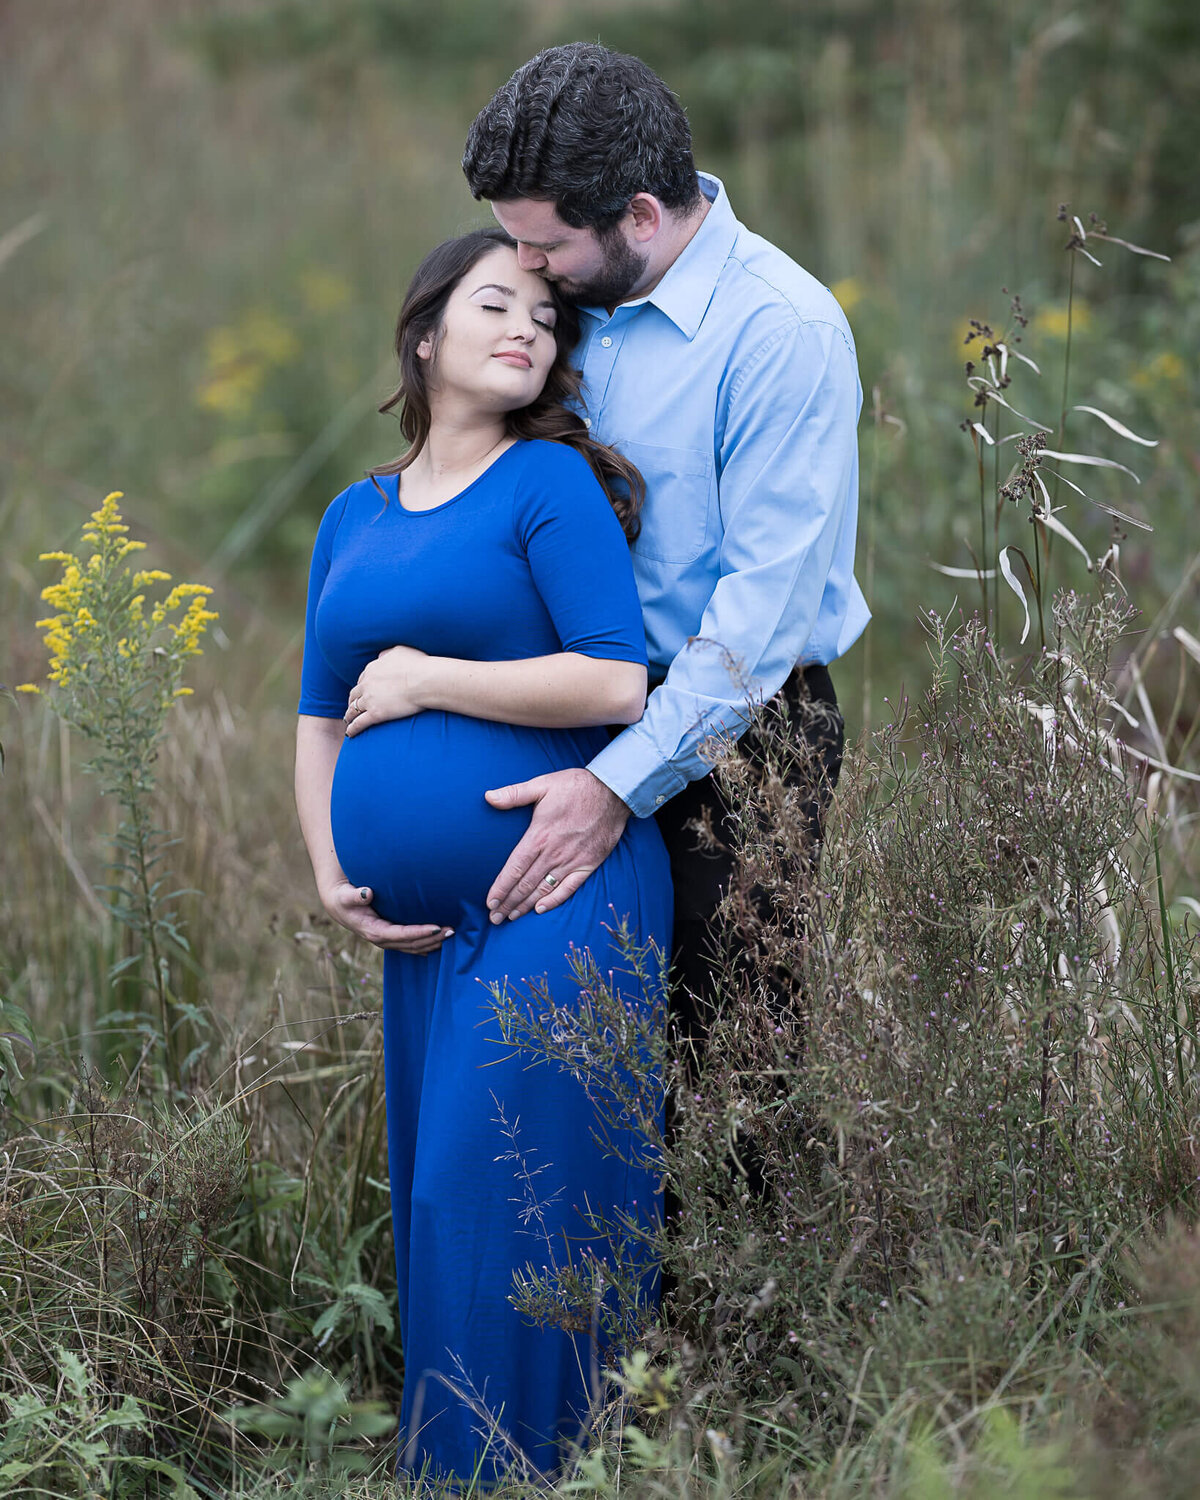 Beautiful maternity couple pose at beautiful outdoor location.